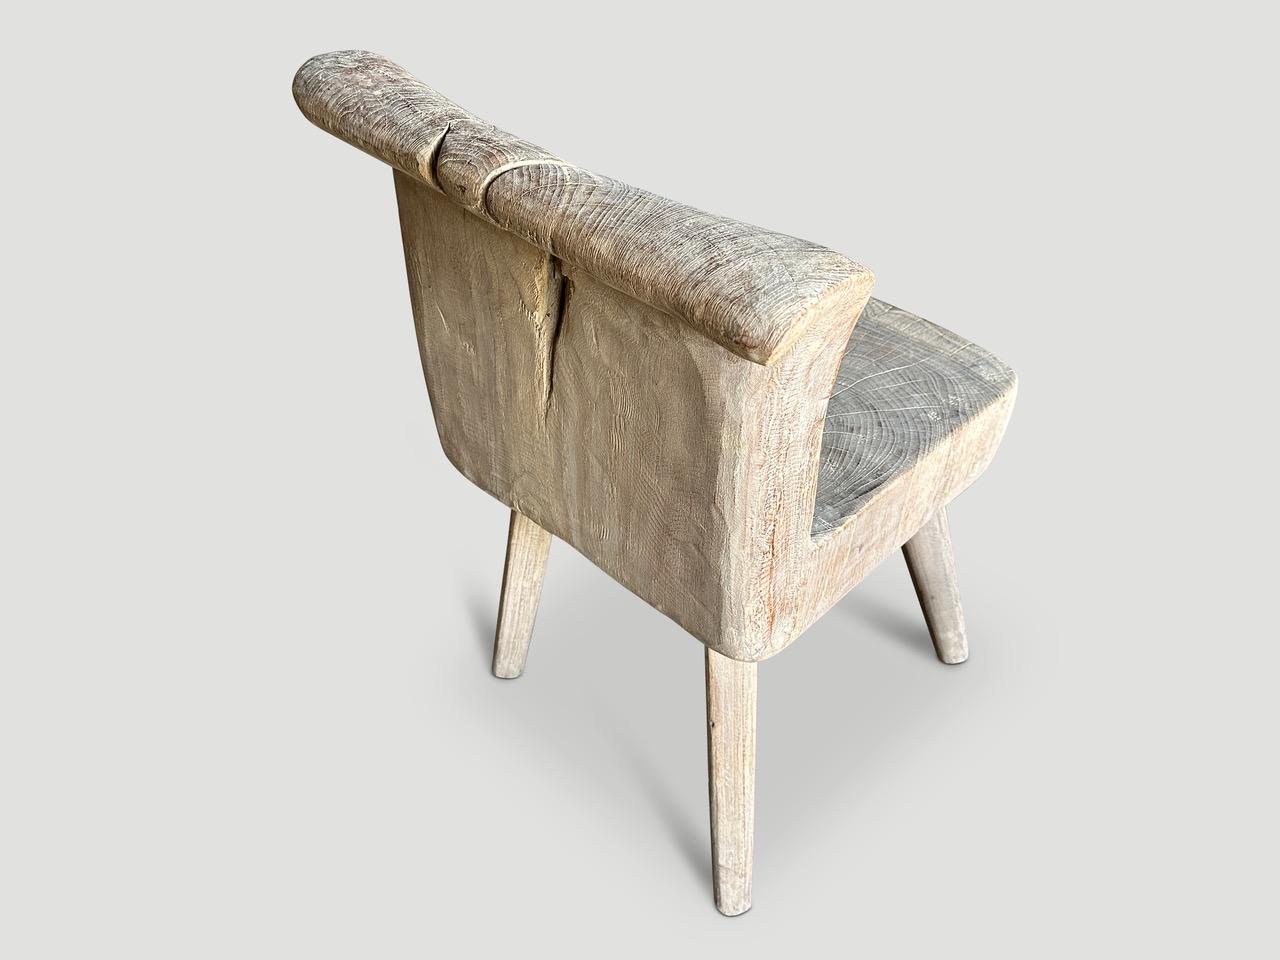 Minimalist Andrianna Shamaris Sculptural Teak Wood Chair or Side Table For Sale